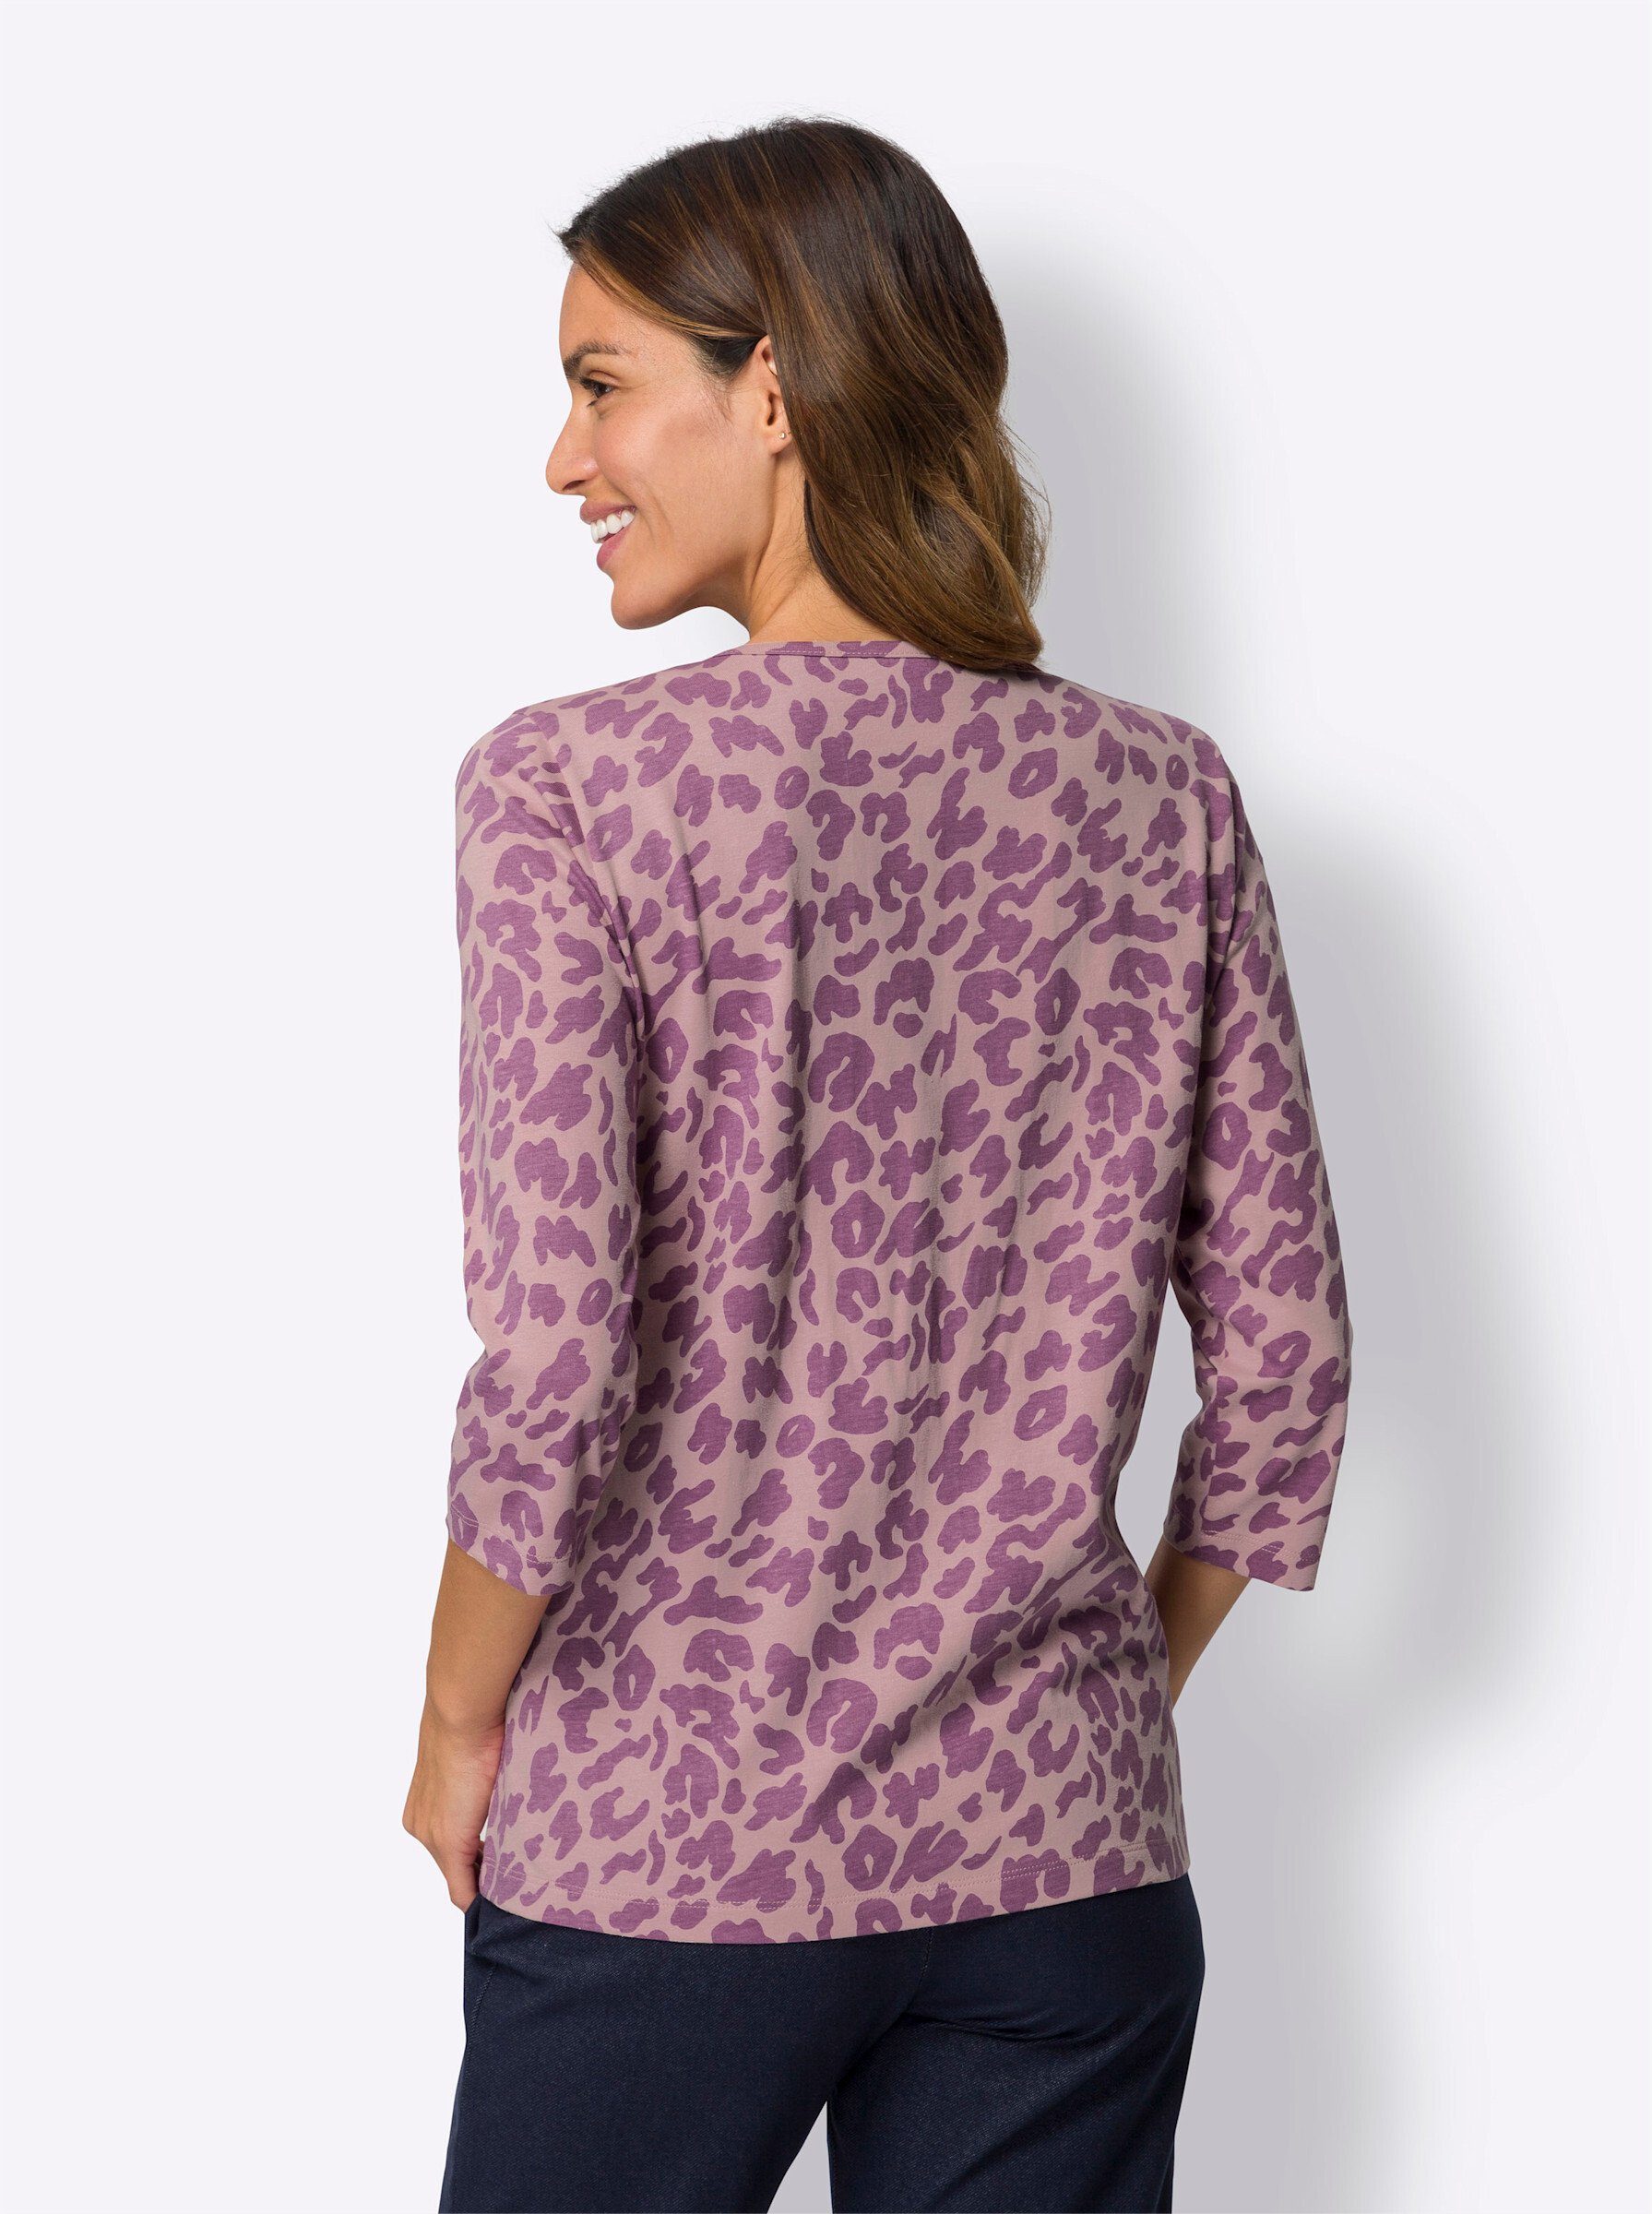 hortensie-violett-bedruckt an! Sieh Trainingsshirt